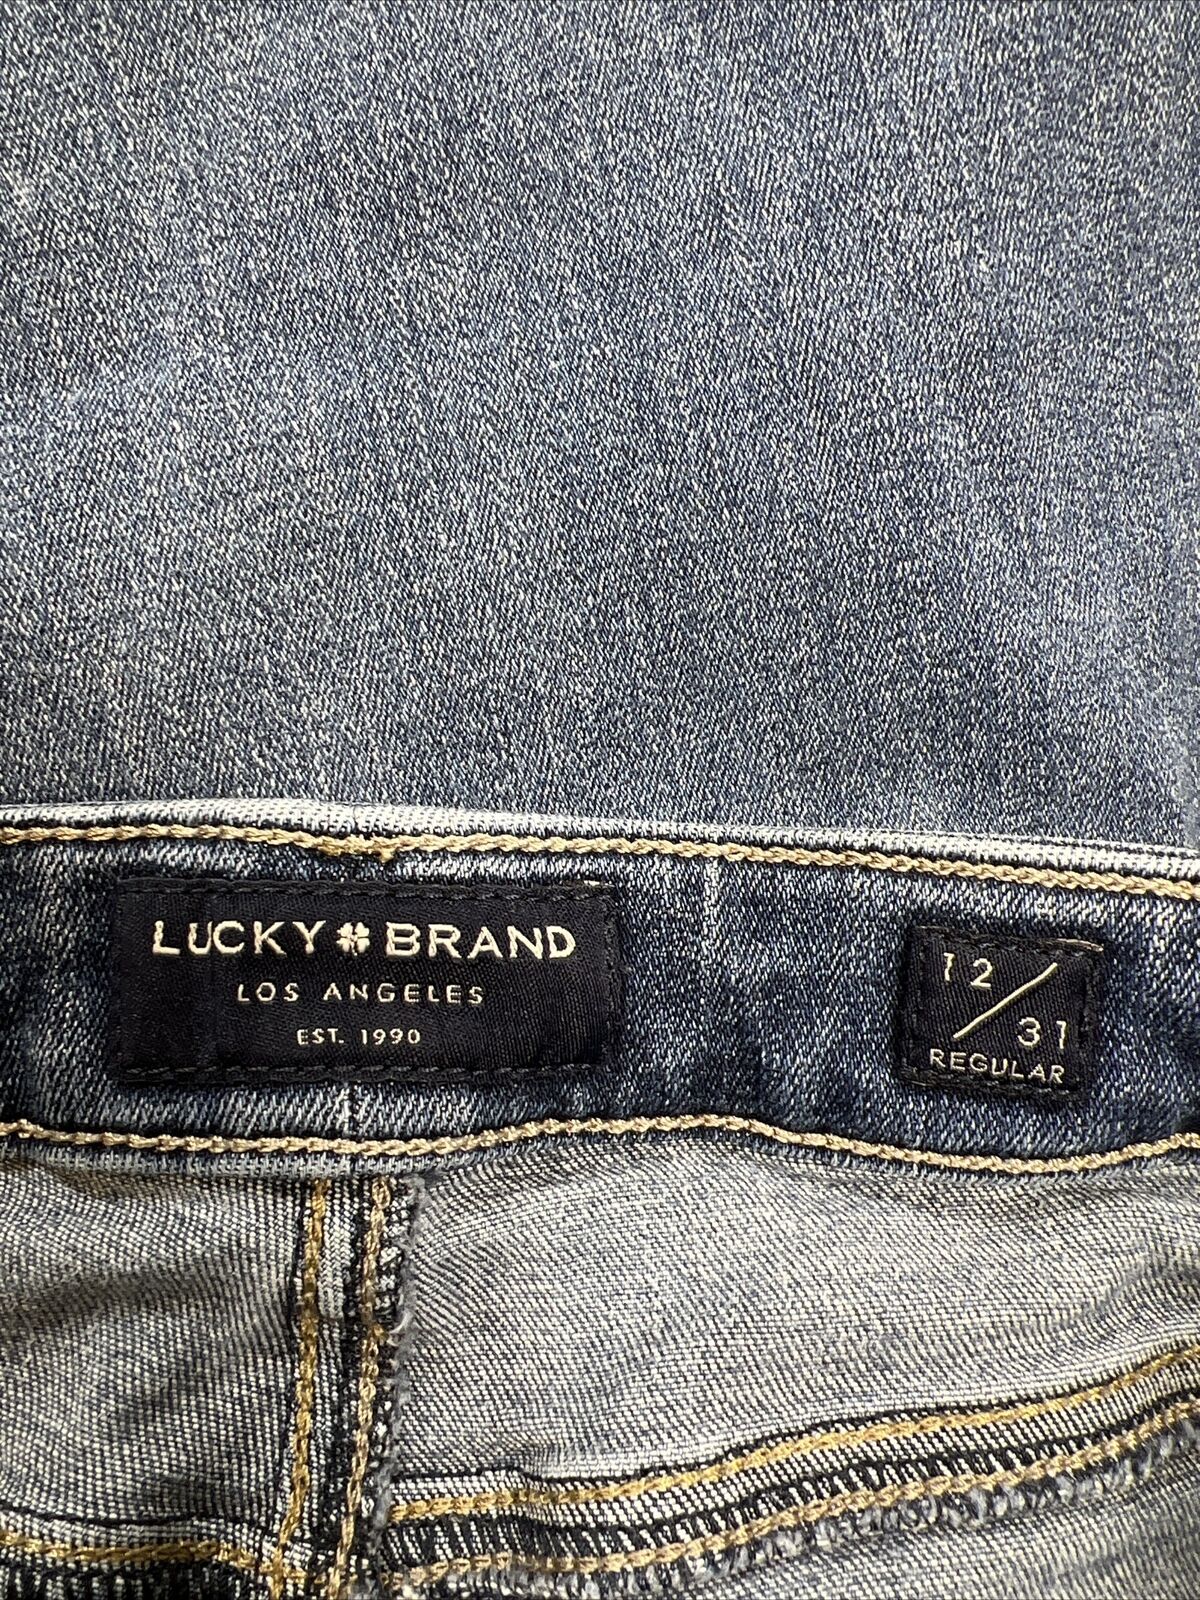 Lucky Brand Women's Medium Wash Low Rise Skinny Lolita Jeans - 12/31